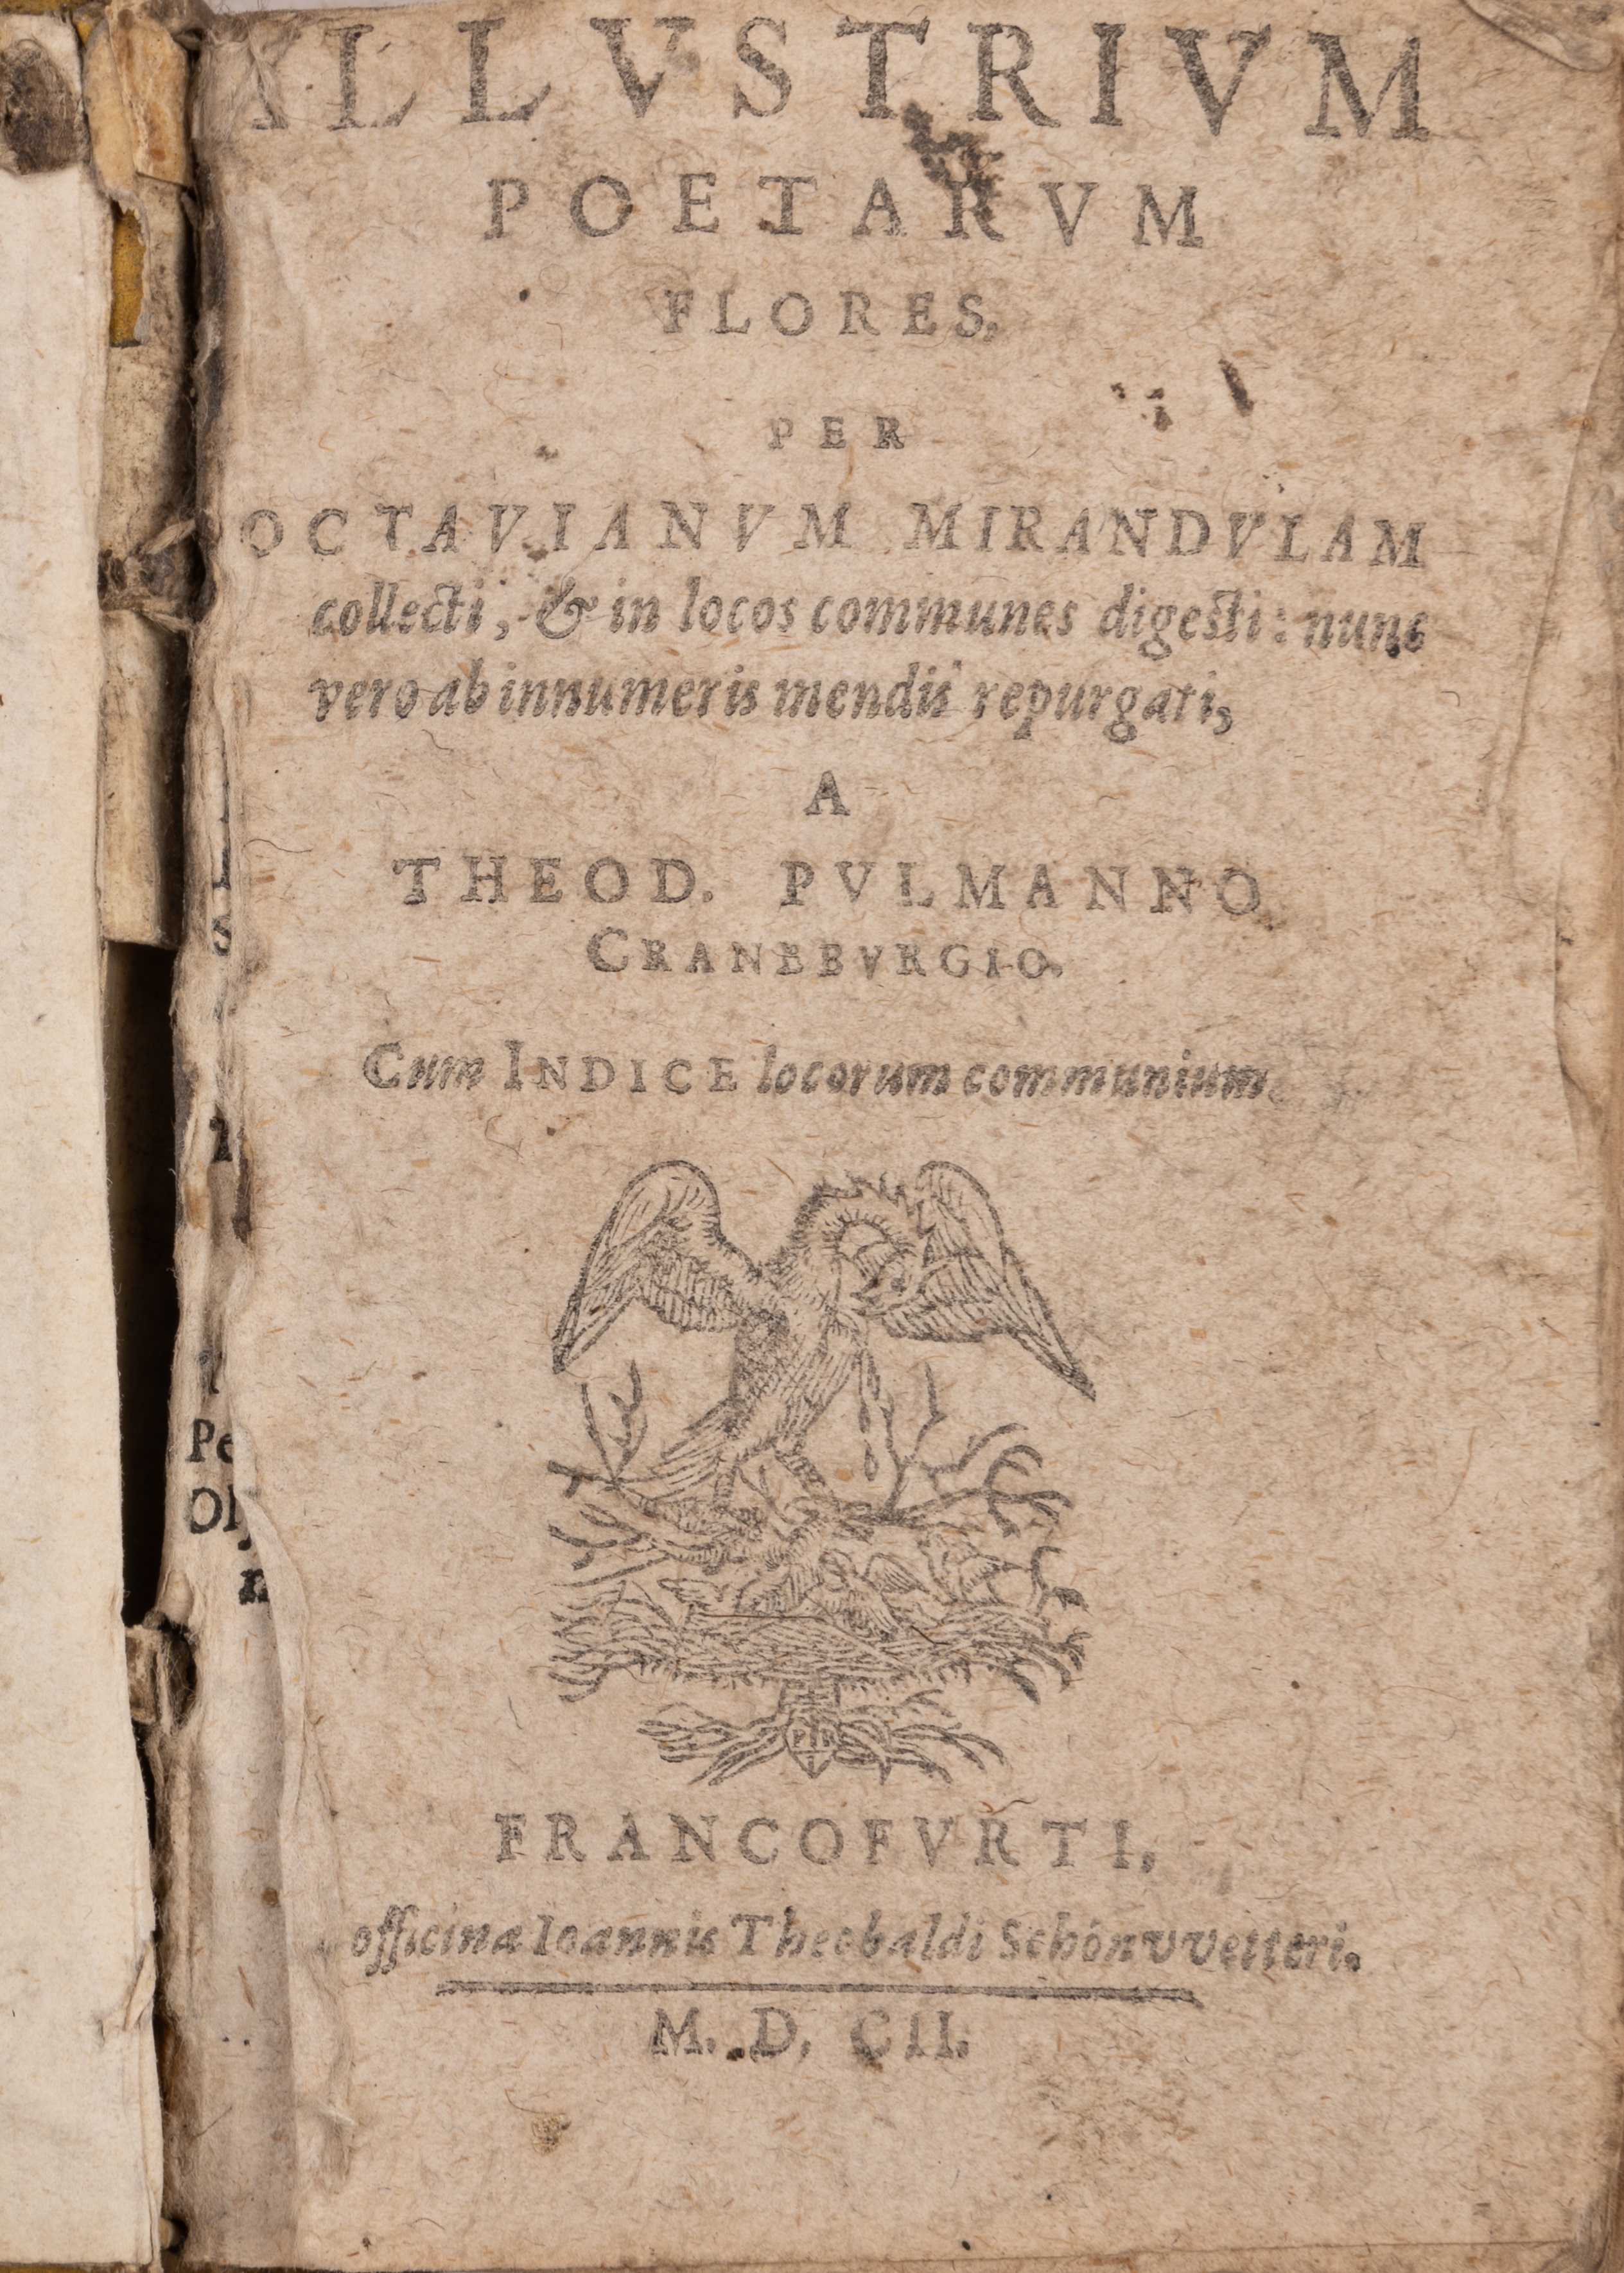 Octavianum Mirandulam - Illustrium Poetarum Flores - Theod. Pulmano. Theobald Schonvvetteri, - Image 3 of 3